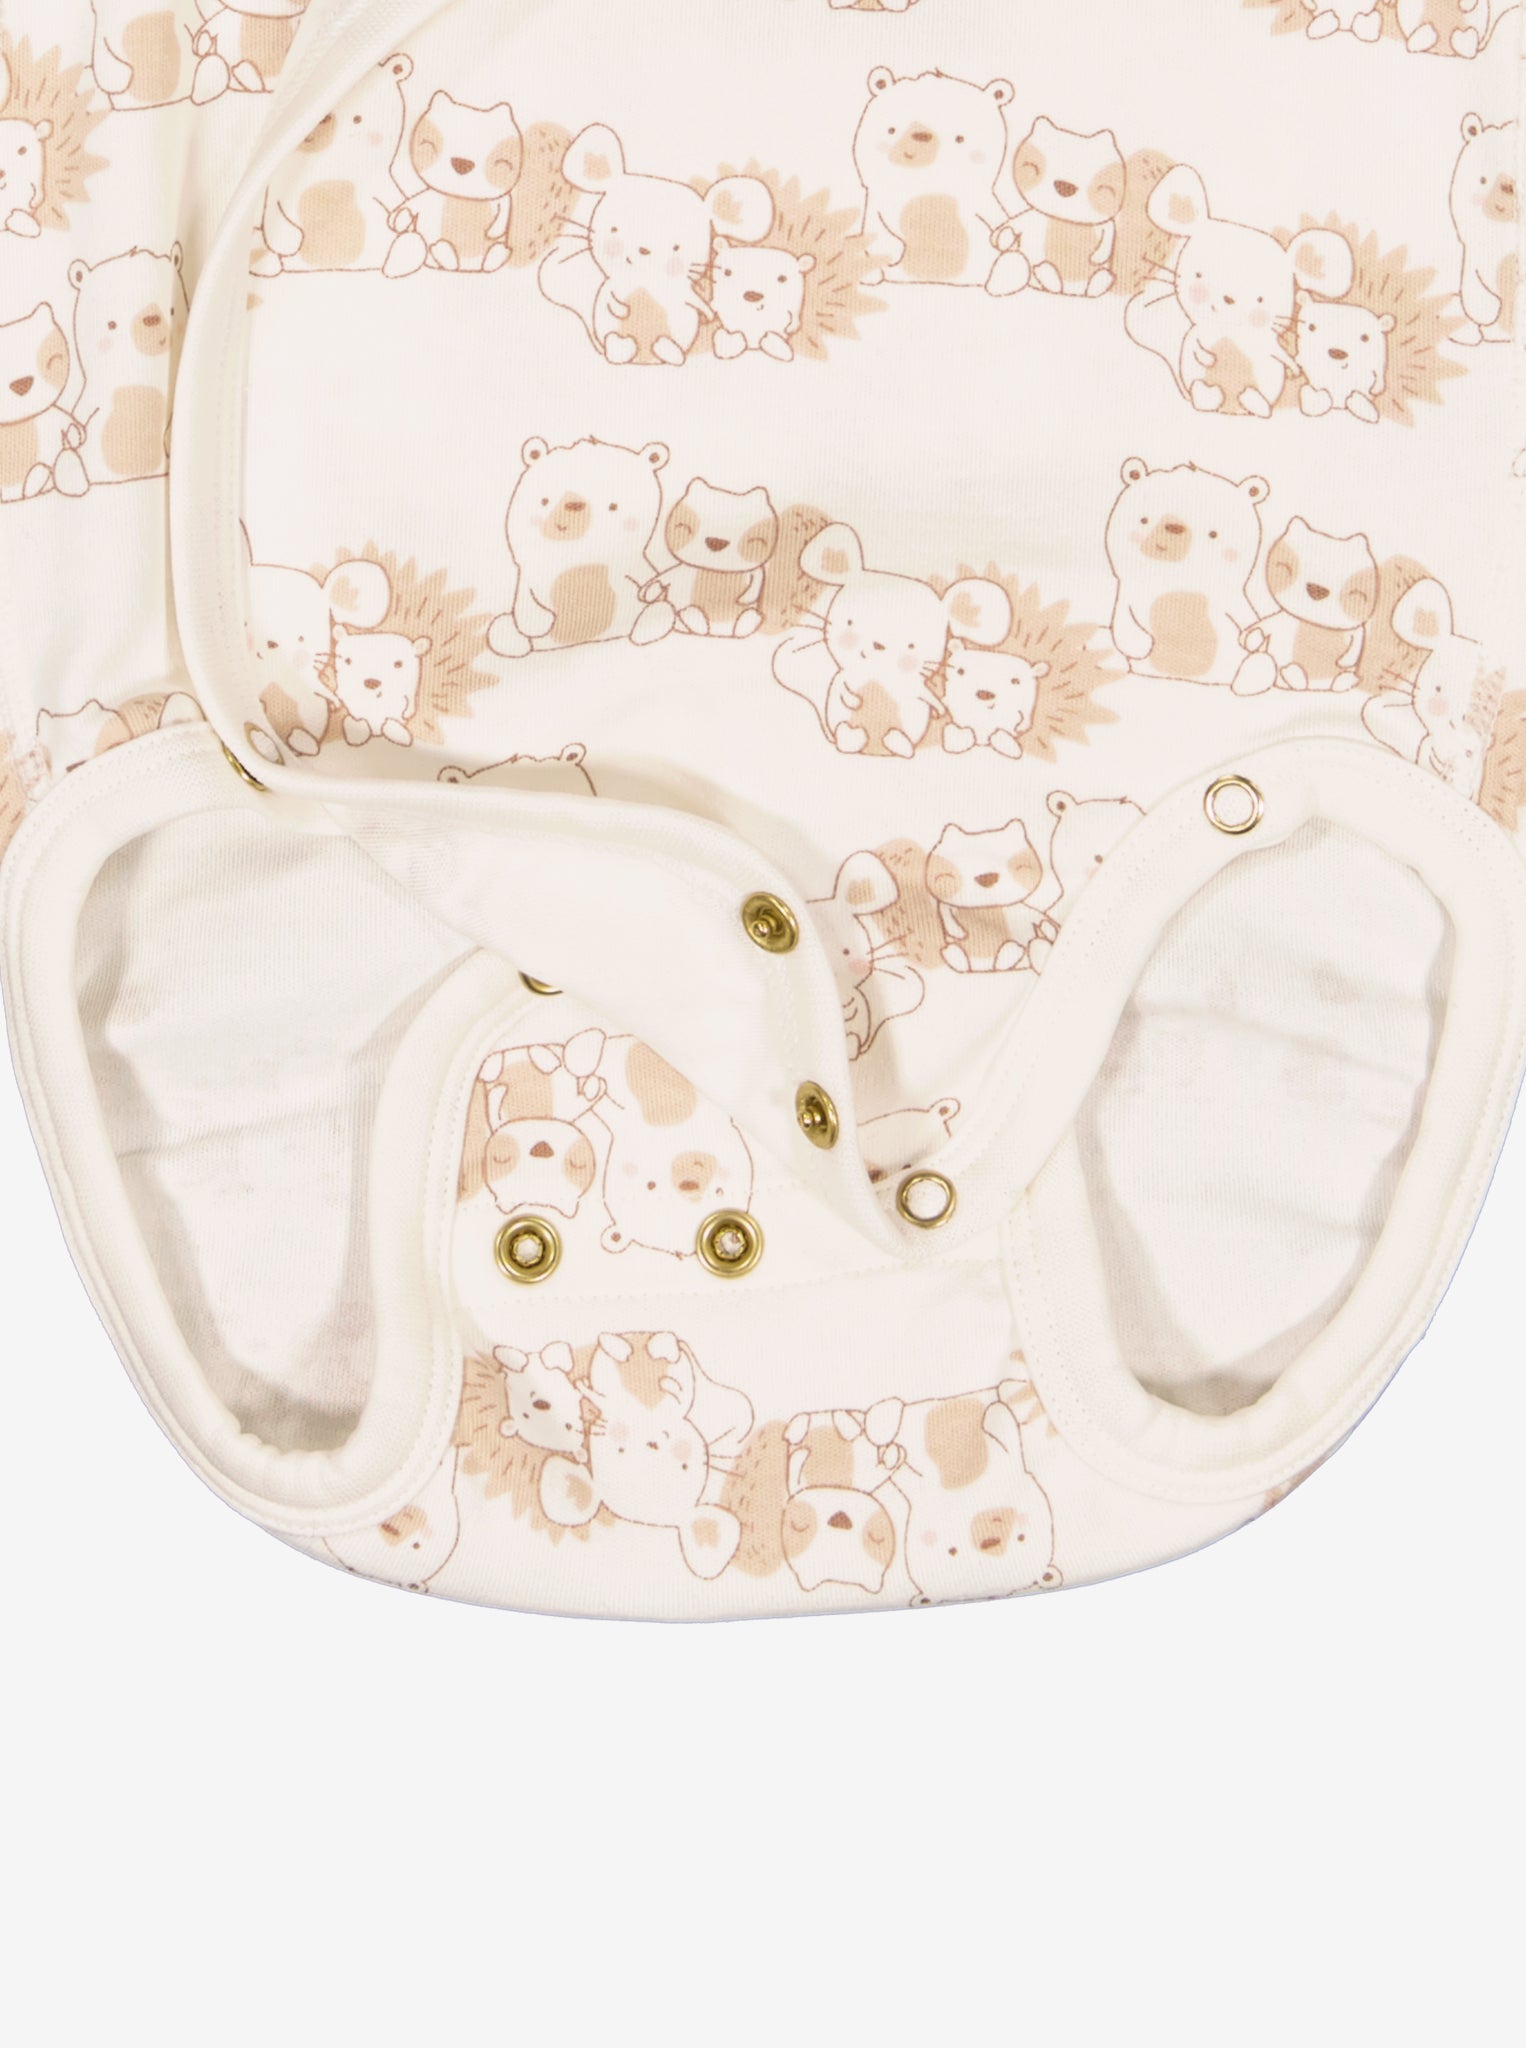  Animal Print Wraparound Babygrow from Polarn O. Pyret Kidswear. Made using environmentally friendly materials.